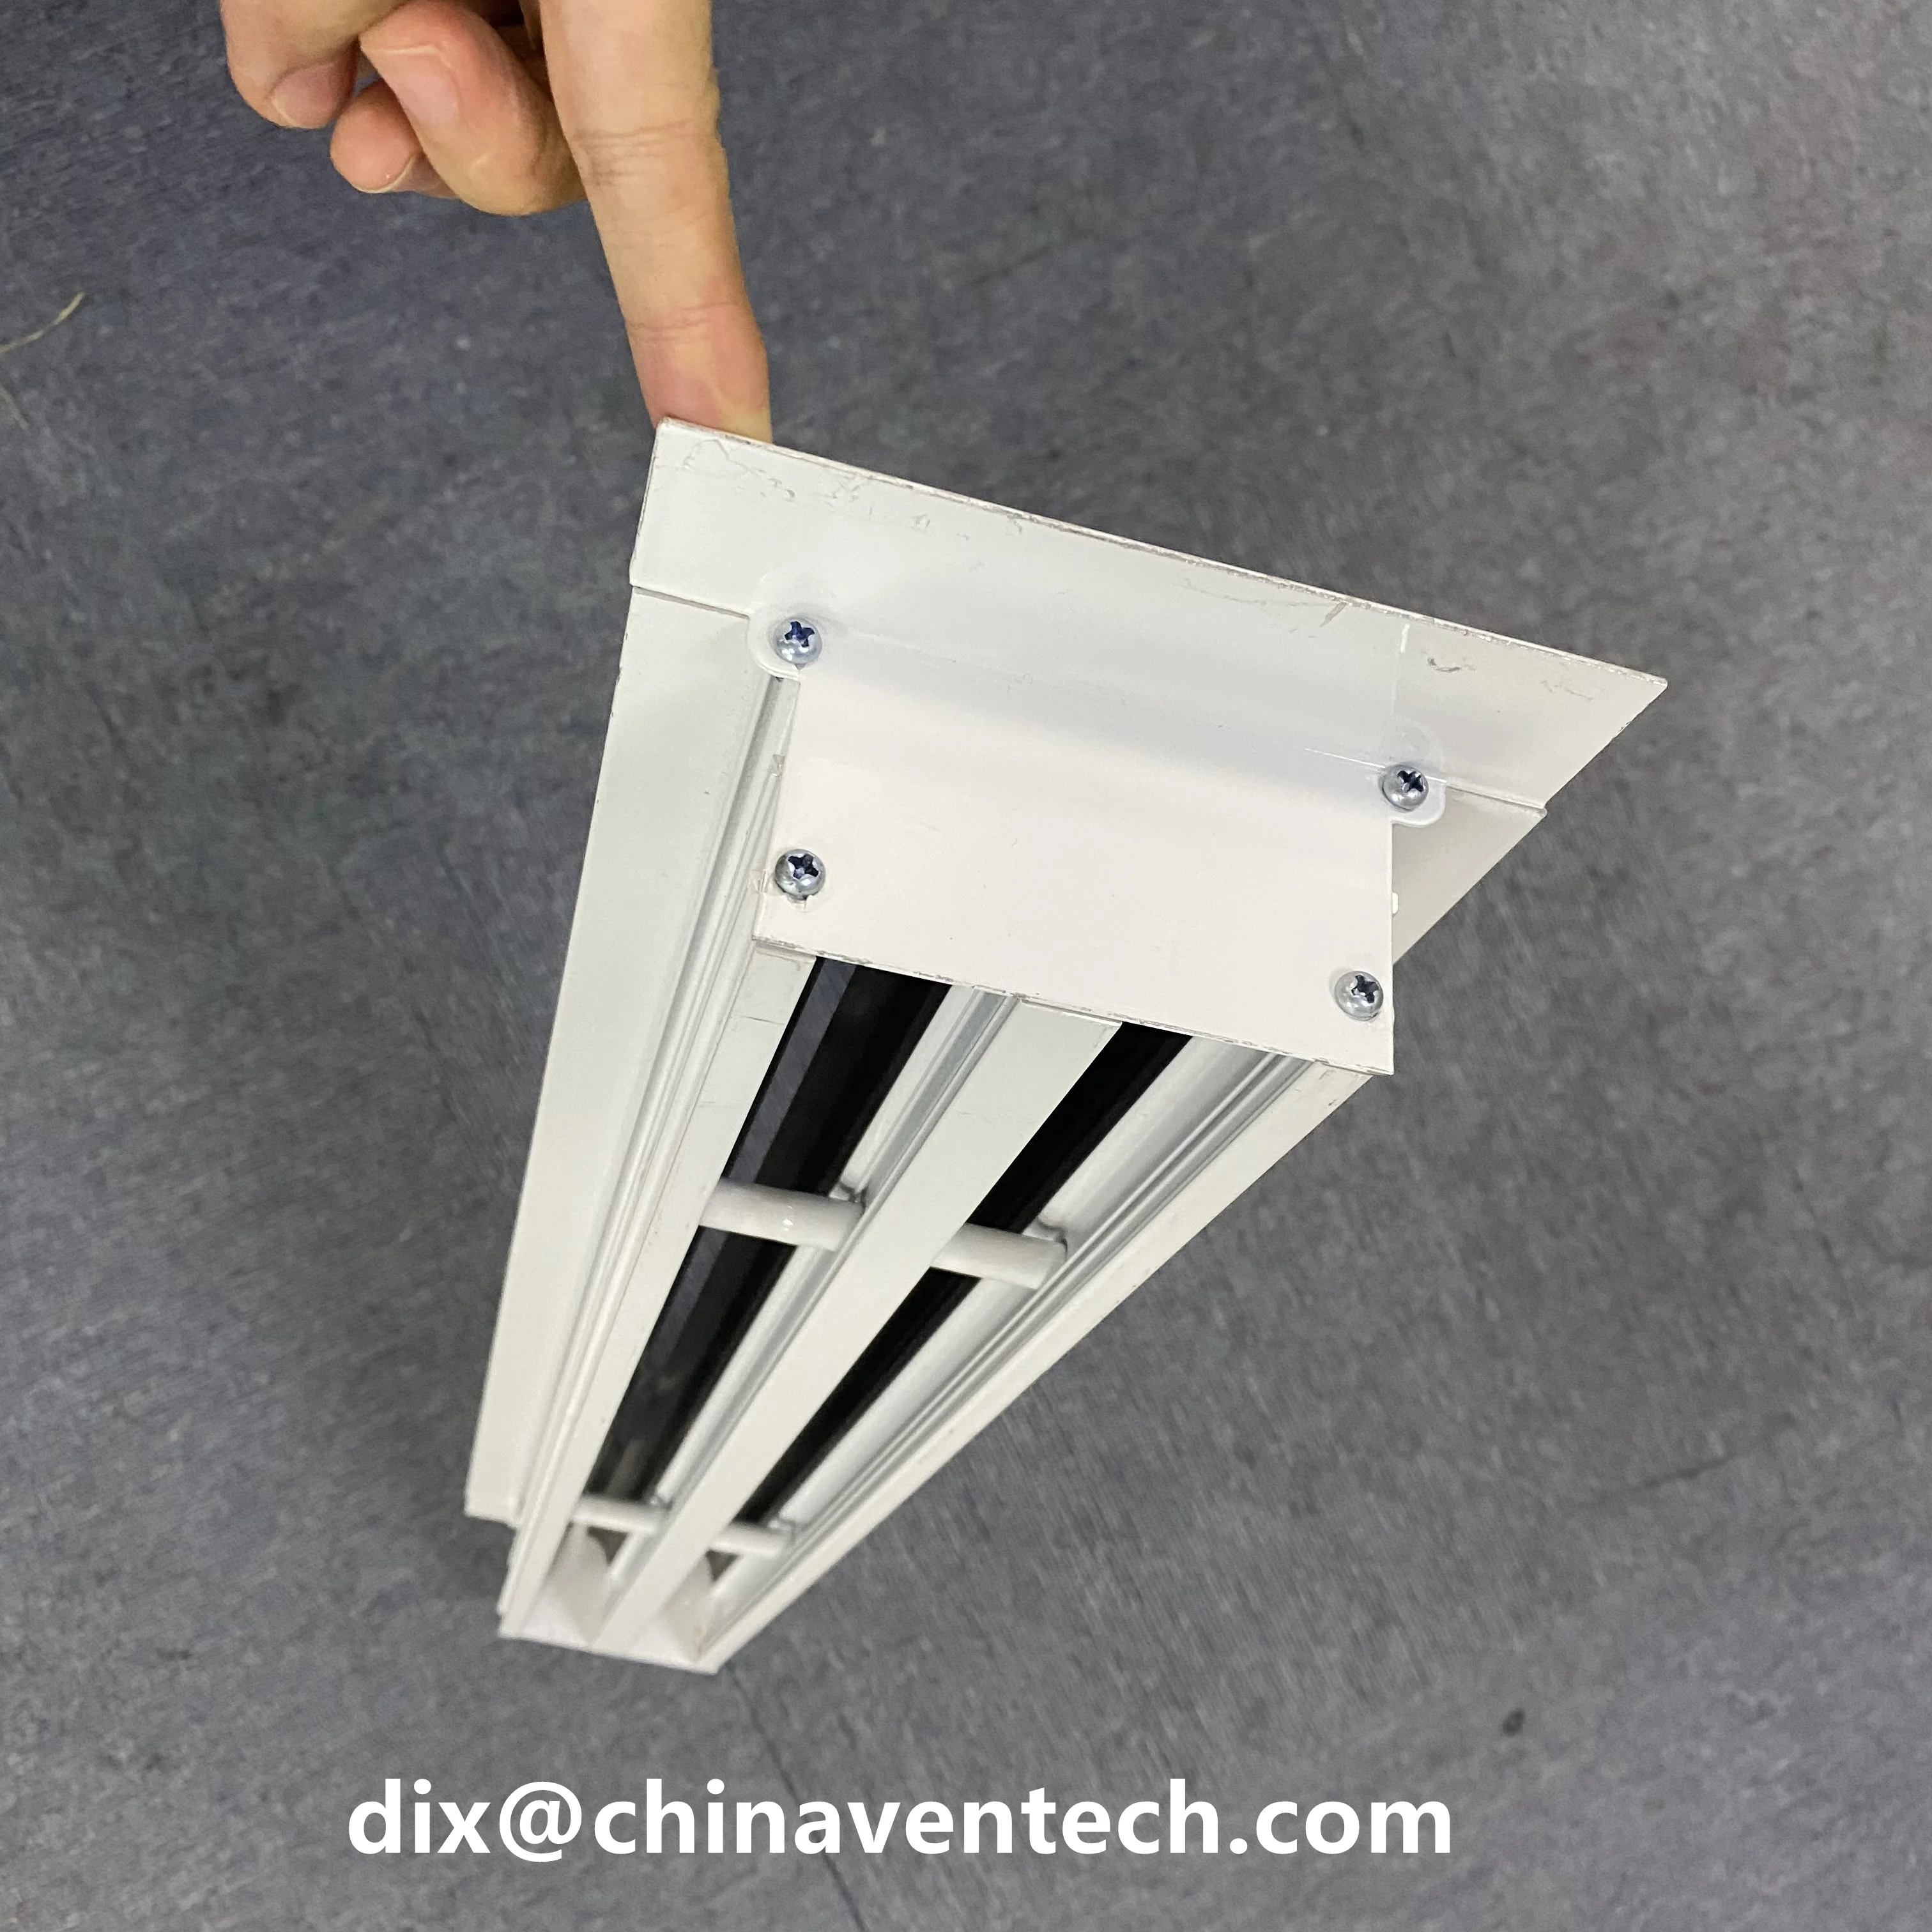 Hvac ducting mounted ventilation fresh air size customized plenum box supply air linear slot diffuser